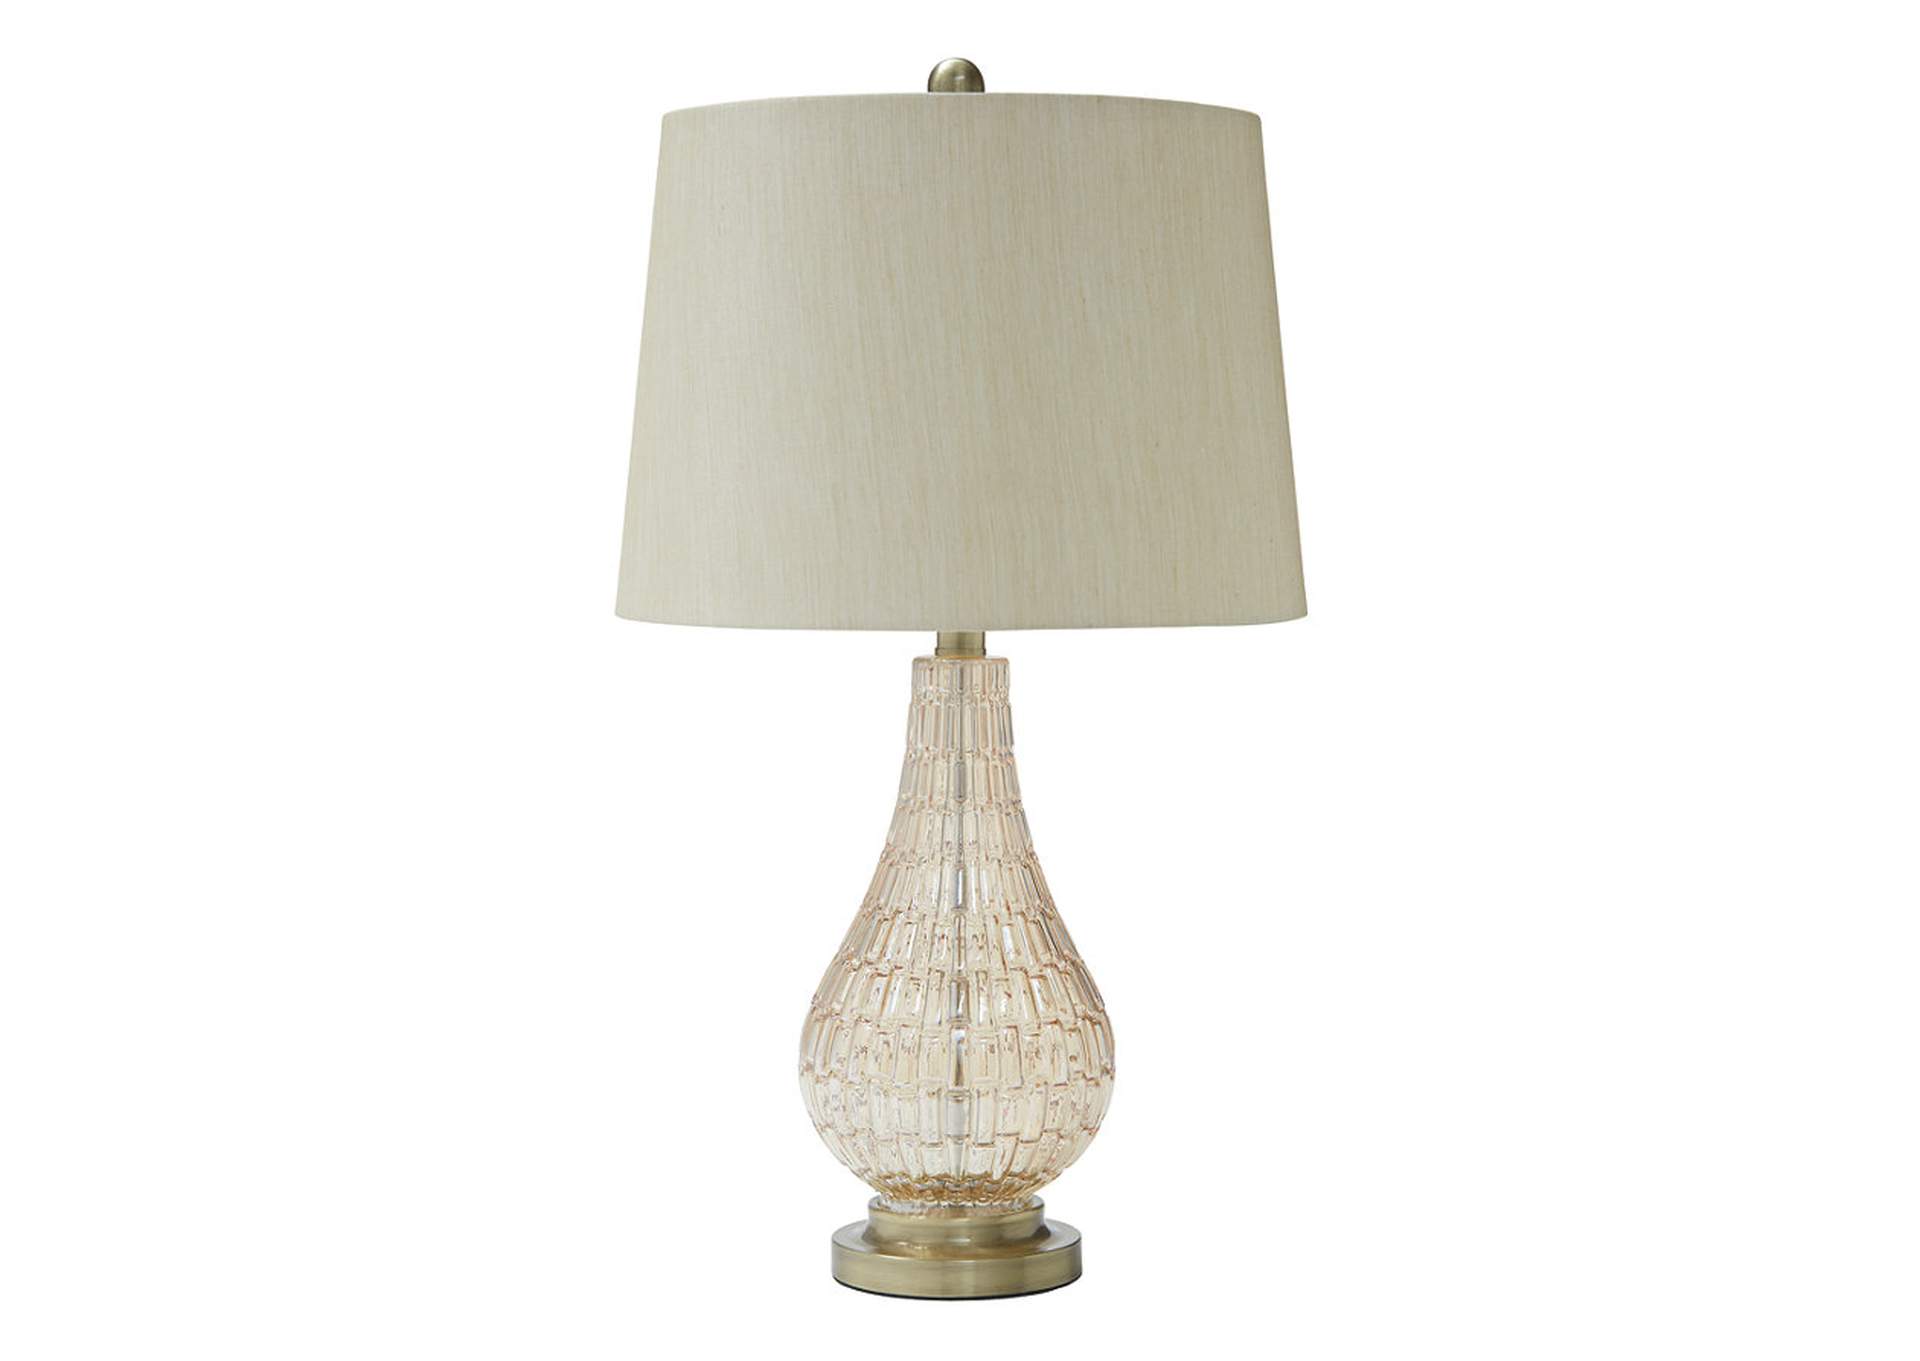 Latoya Table Lamp